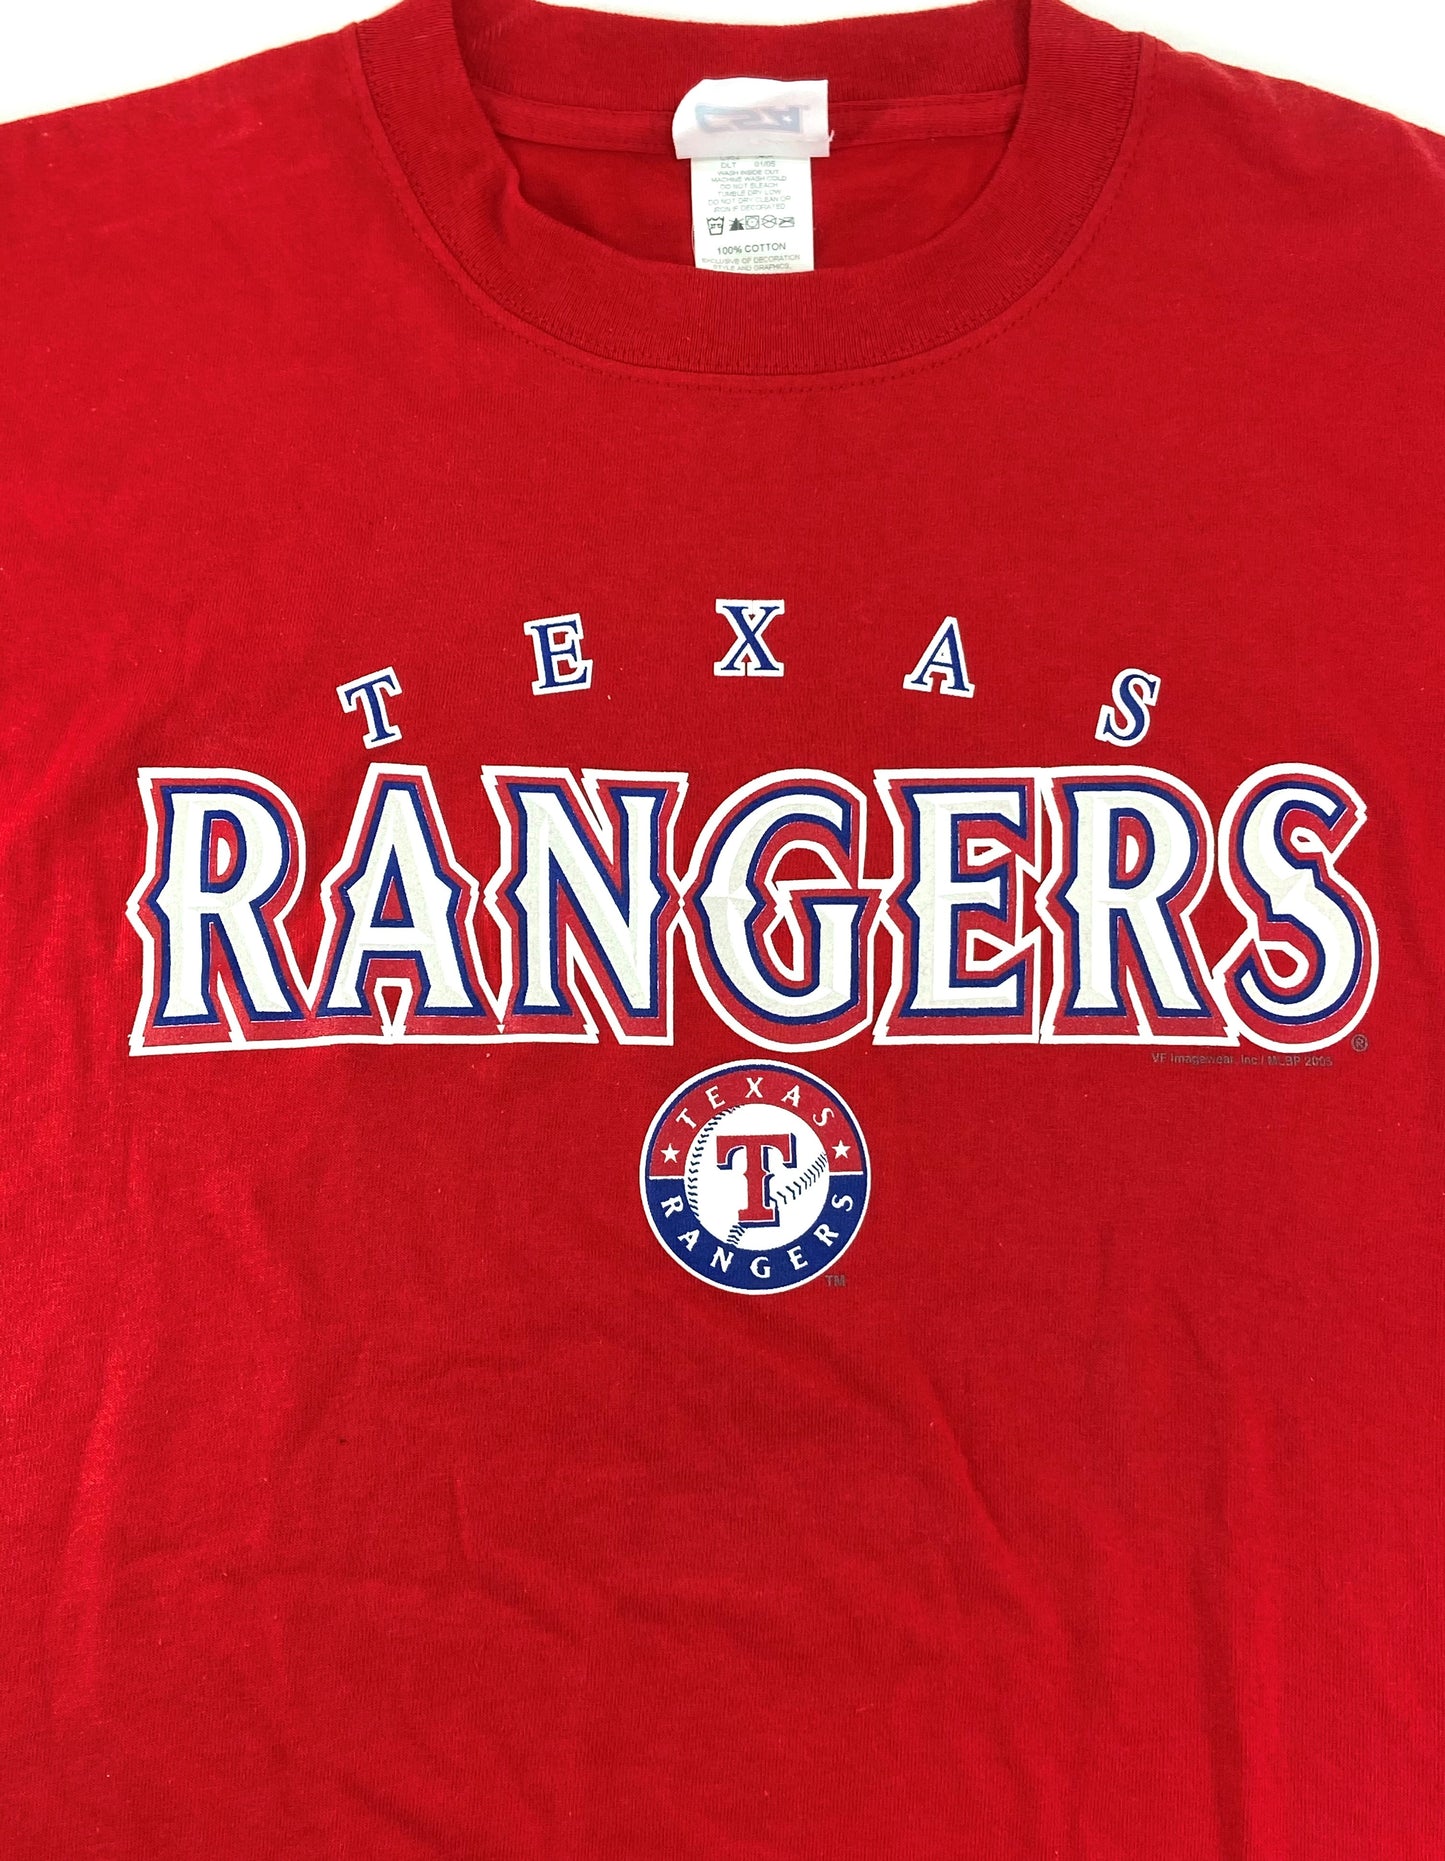 Texas Rangers 2005 MLB Adult Medium Red T-Shirt (New) by CSA